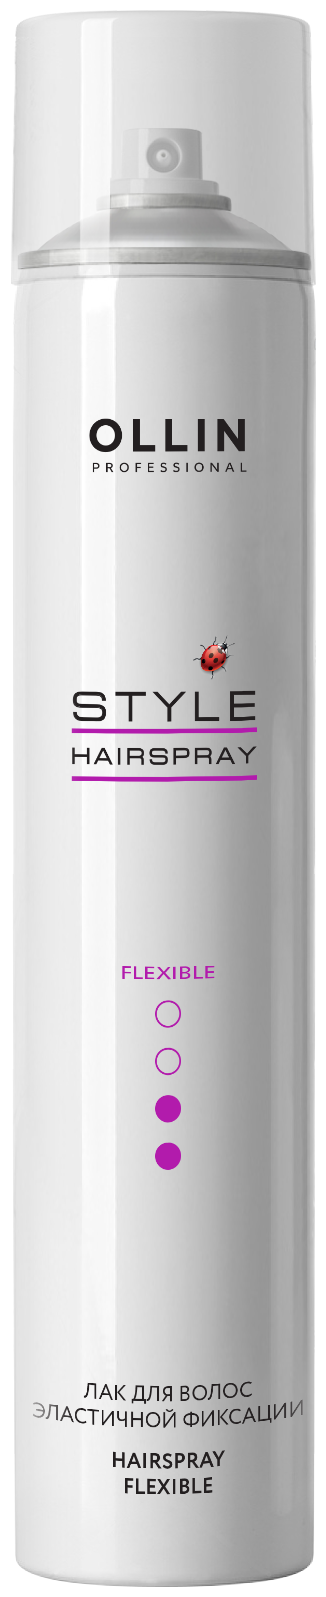 OLLIN Professional Лак для волос Style Hairspray средняя фиксация